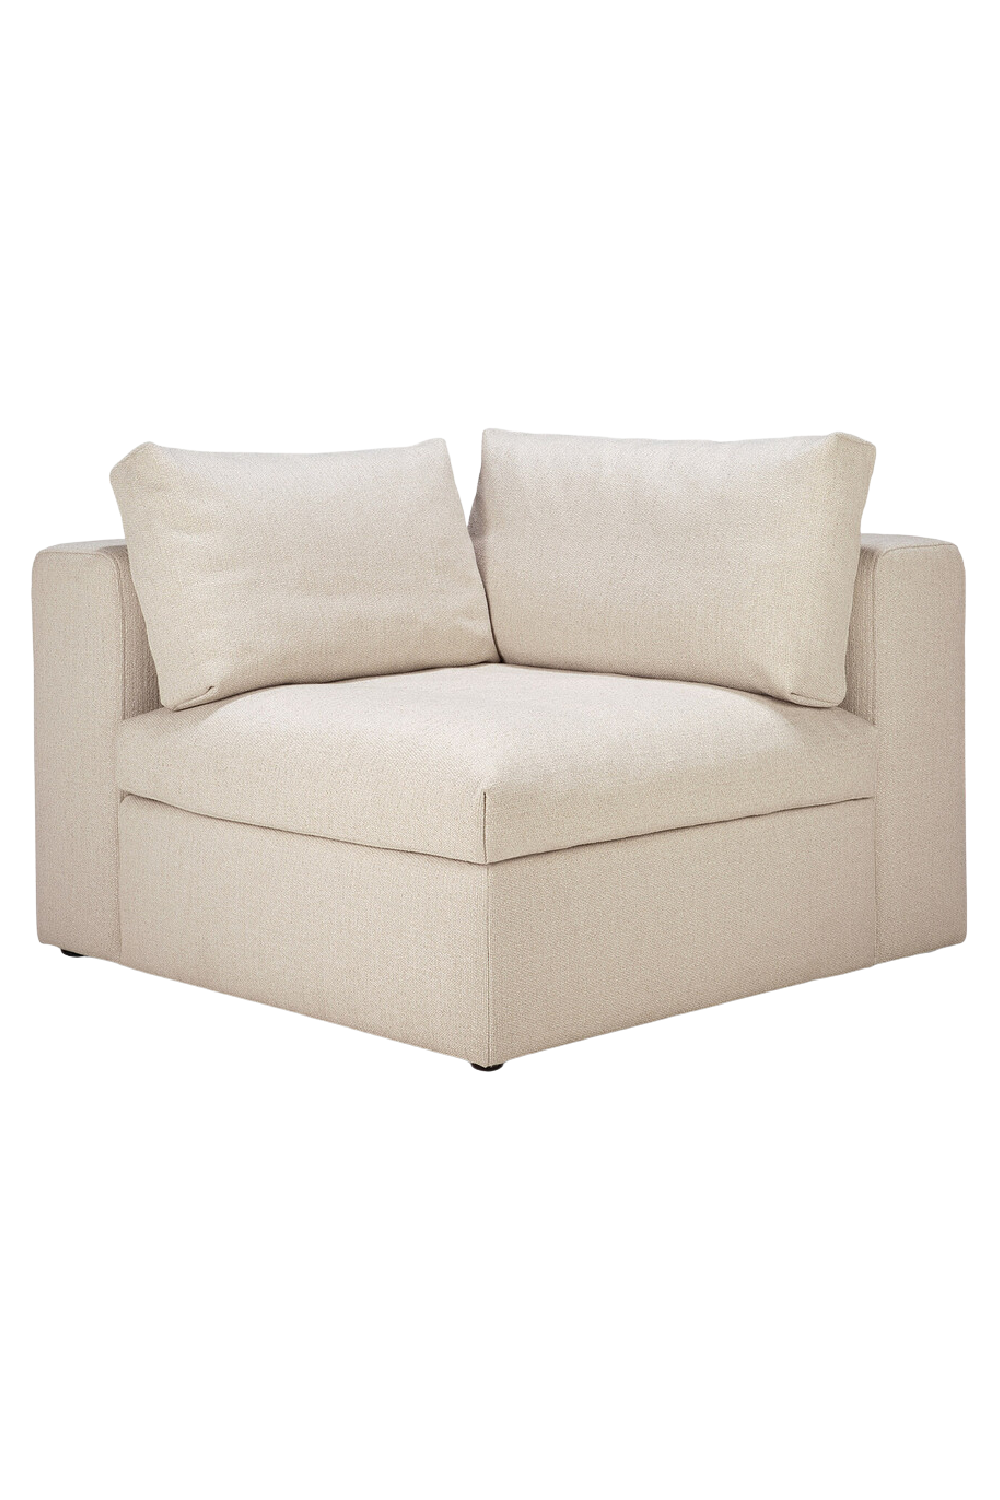 Off-White Modular Sofa | Ethnicraft Mellow | Woodfurniture.com